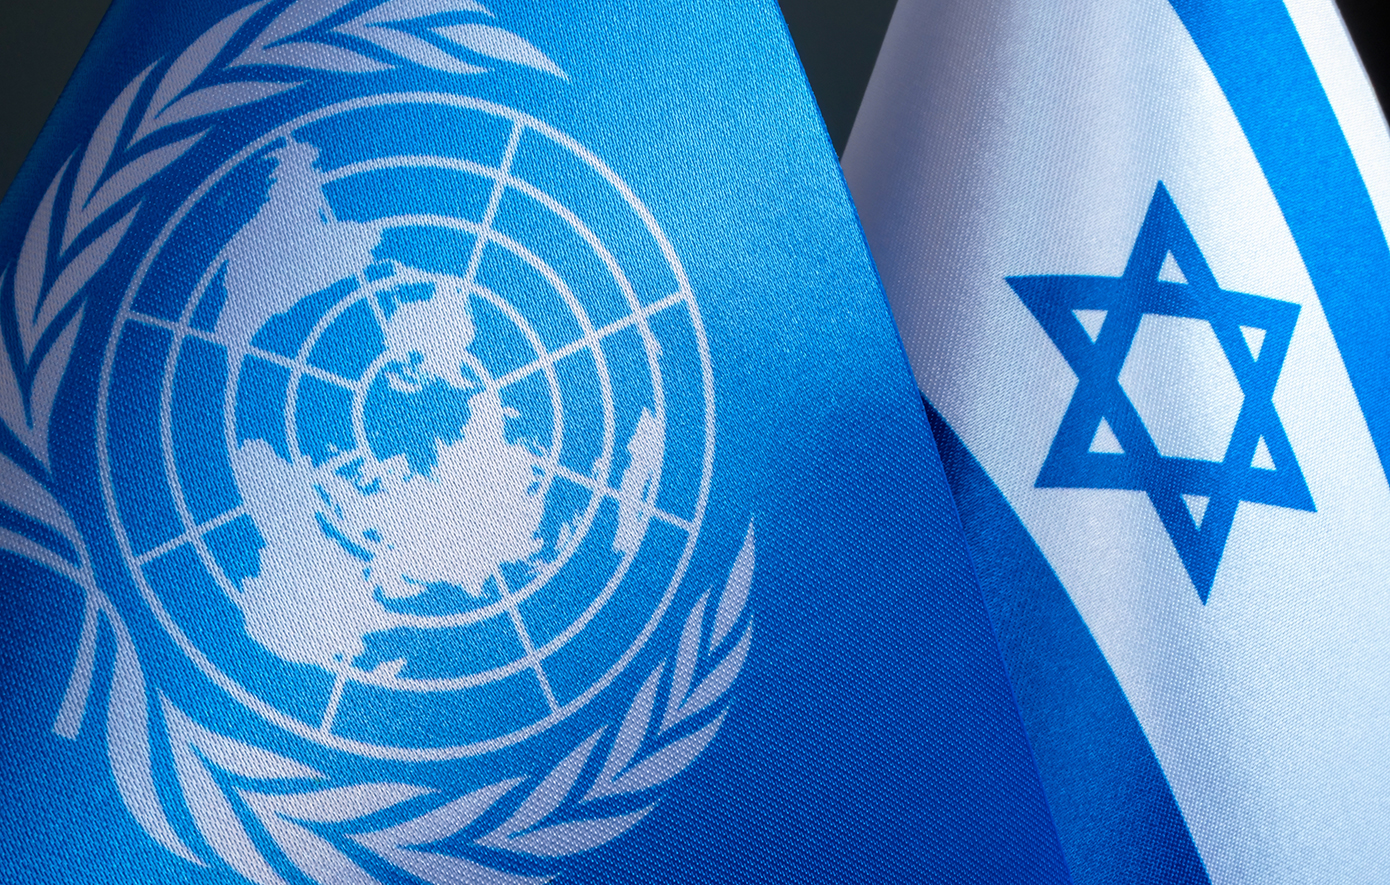 To Ισραήλ τα βάζει με την έκθεση του ΟΗΕ – «Η Χαμάς έχει διεισδύσει τόσο βαθιά στην UNRWA»